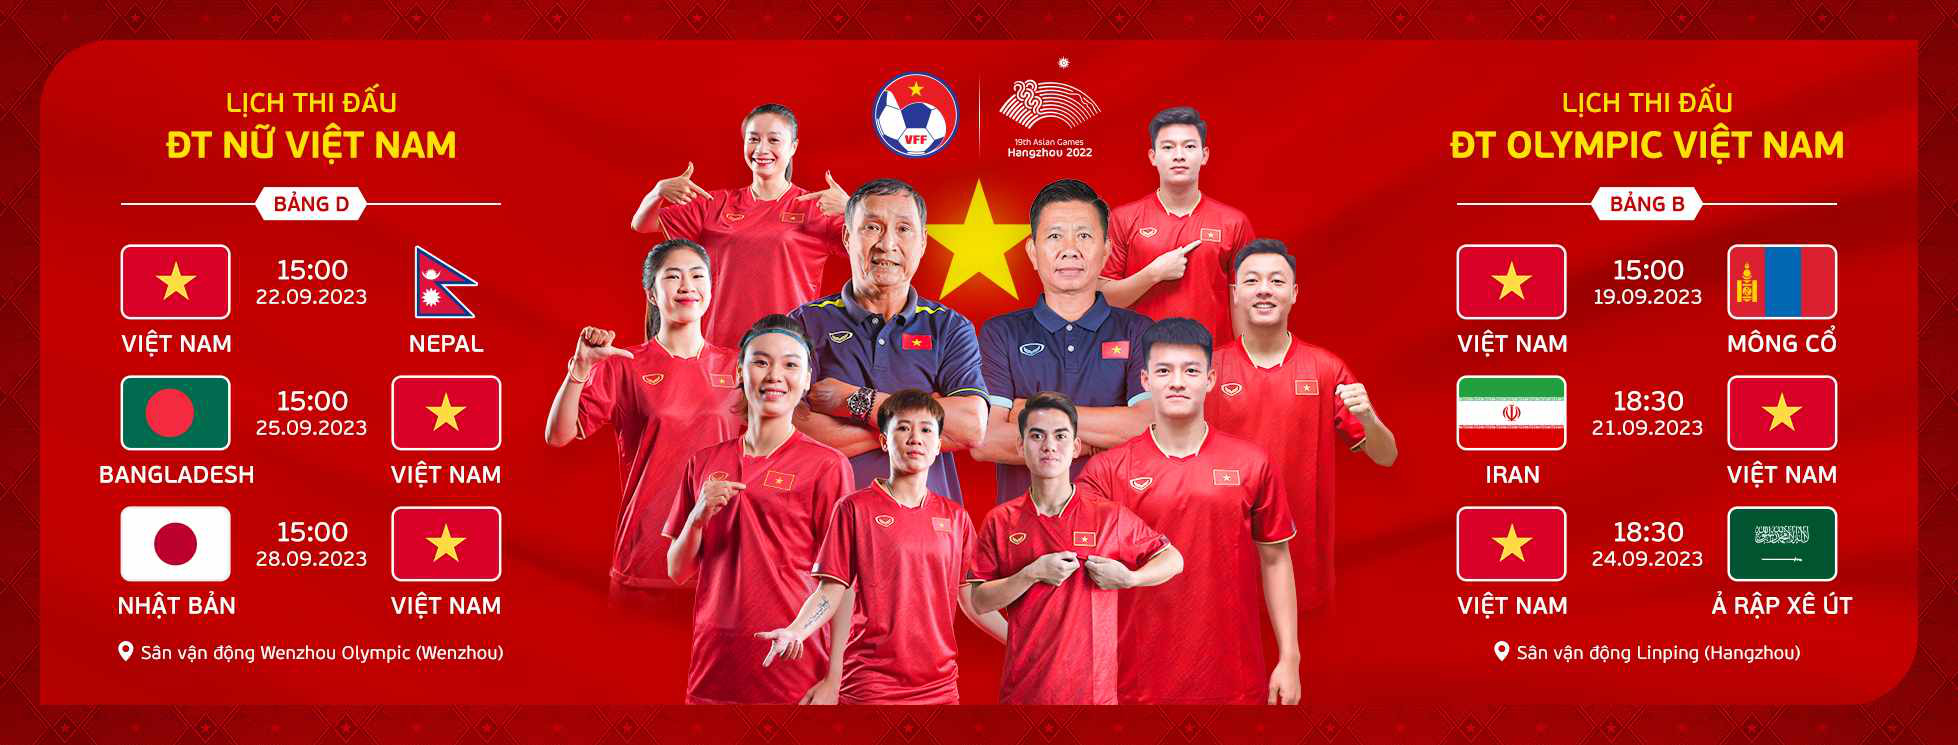 Coach Mai Duc Chung rejuvenates Vietnam women’s team